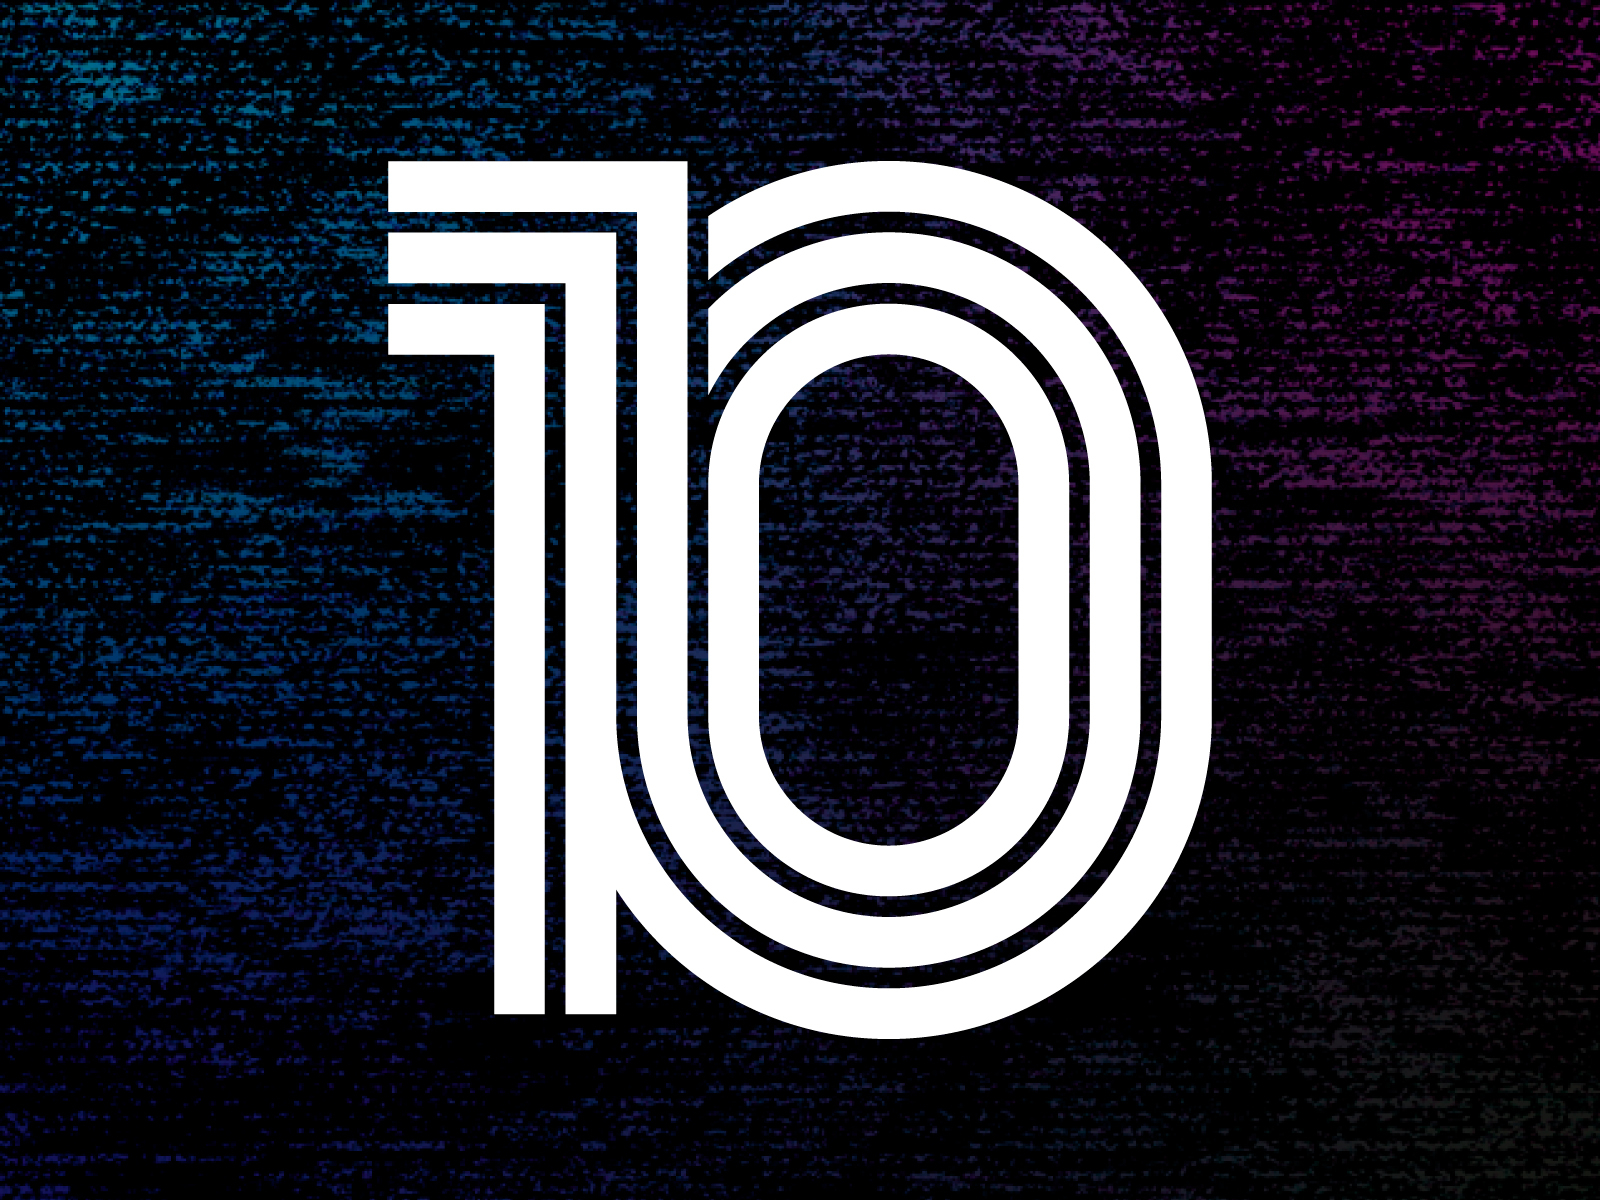 10 year anniversary logo by Niklas Isaksson on Dribbble